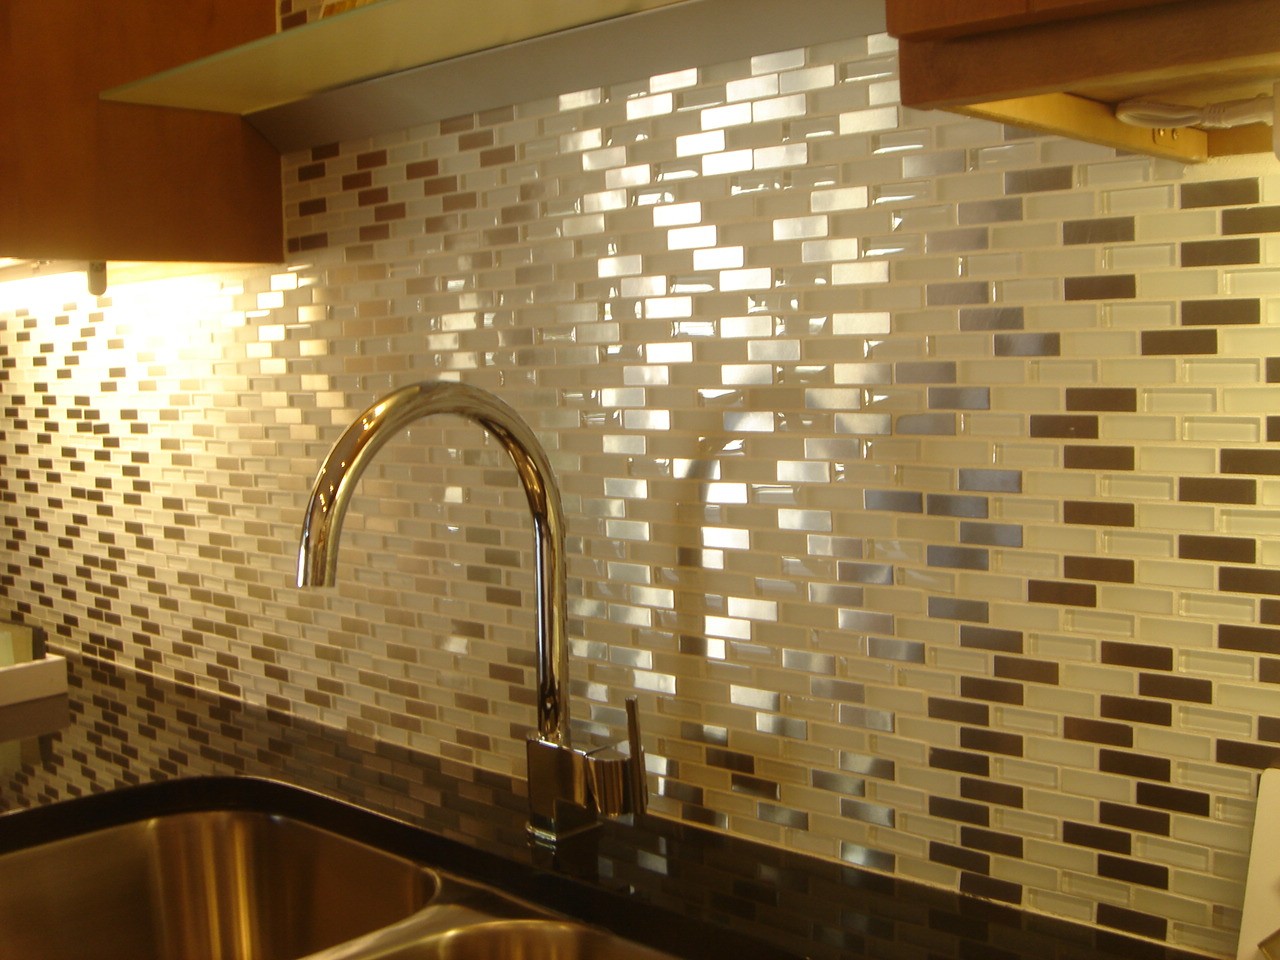 ceramic kitchen wall tiles ideas - Home Decor Ideas